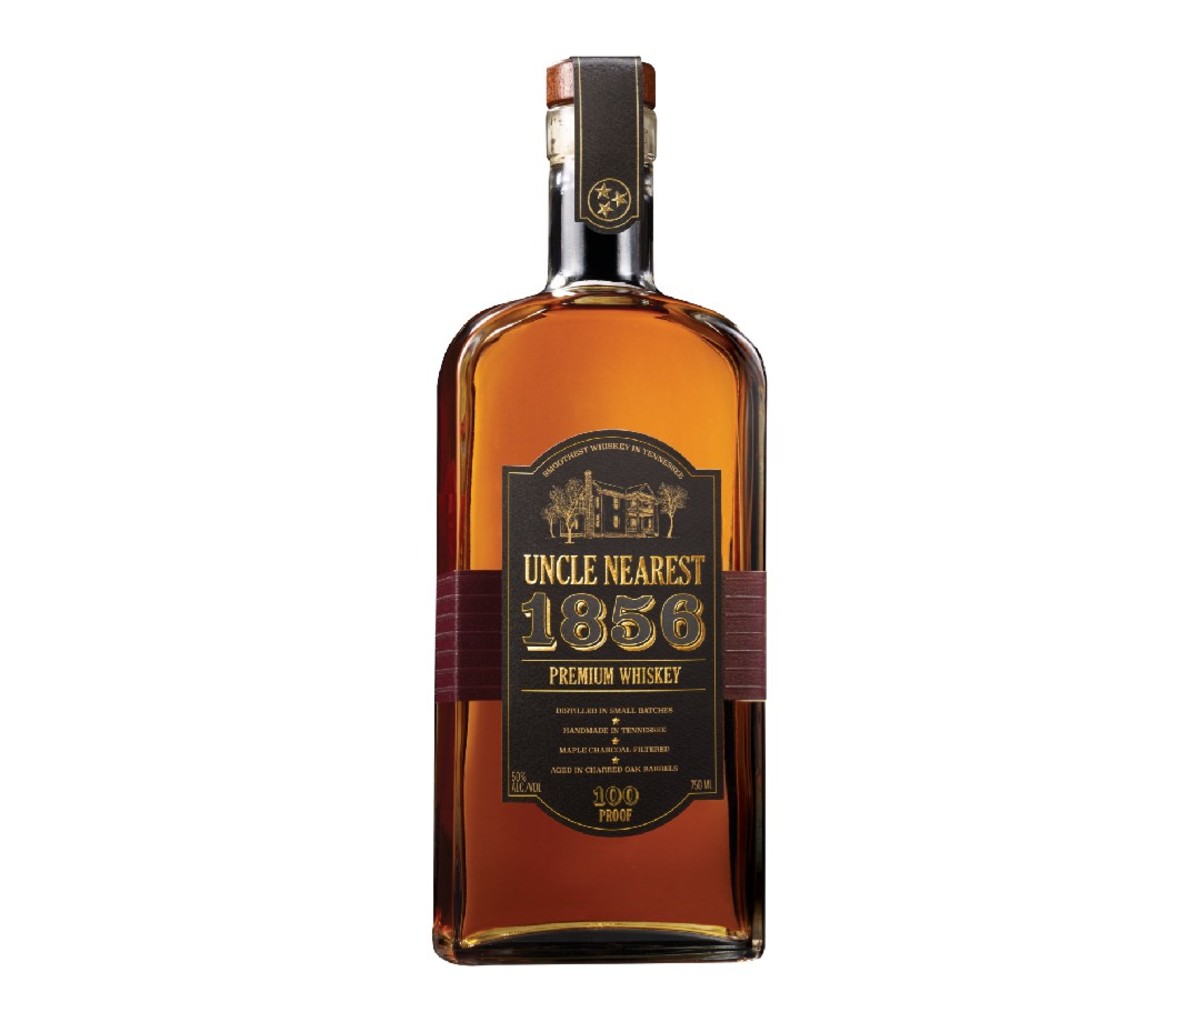 Bottle of Uncle Nearest 1856 whiskey